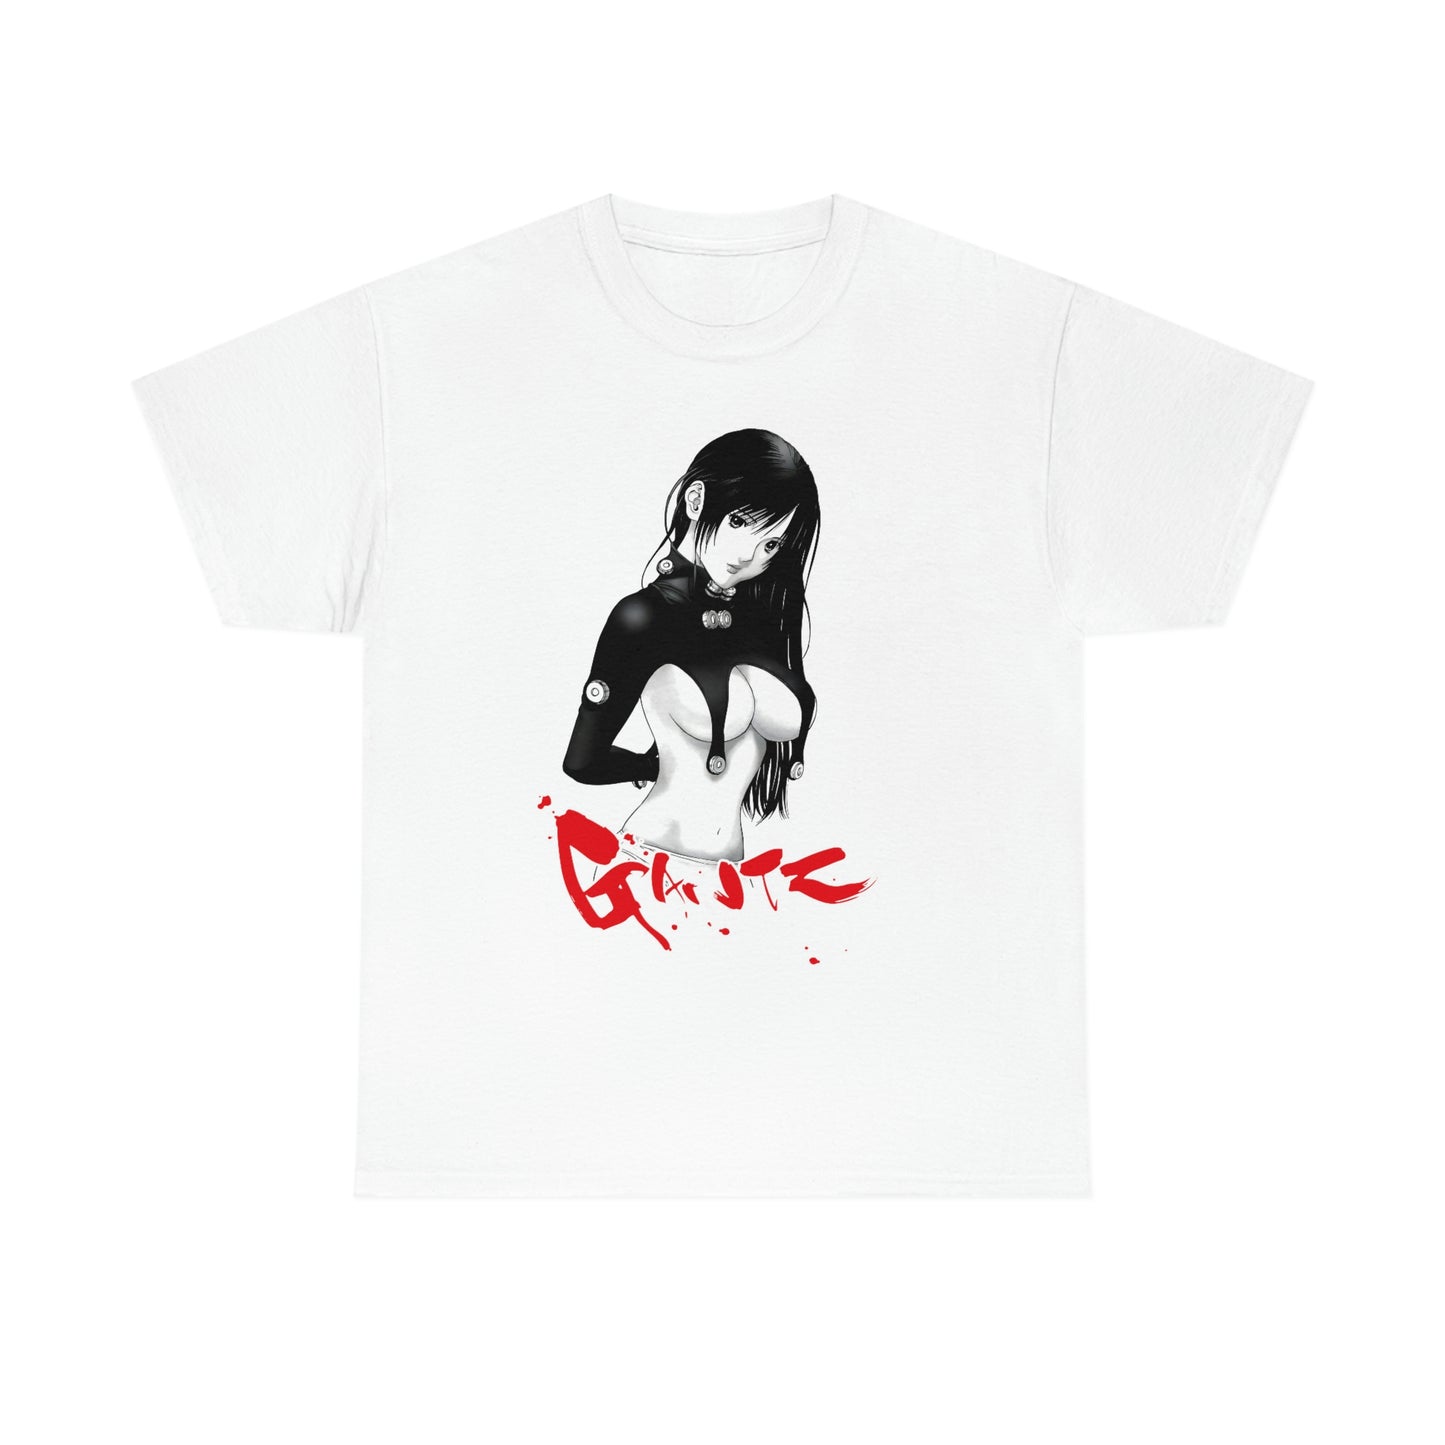 Gantz Reika Shimohira Anime T-Shirt